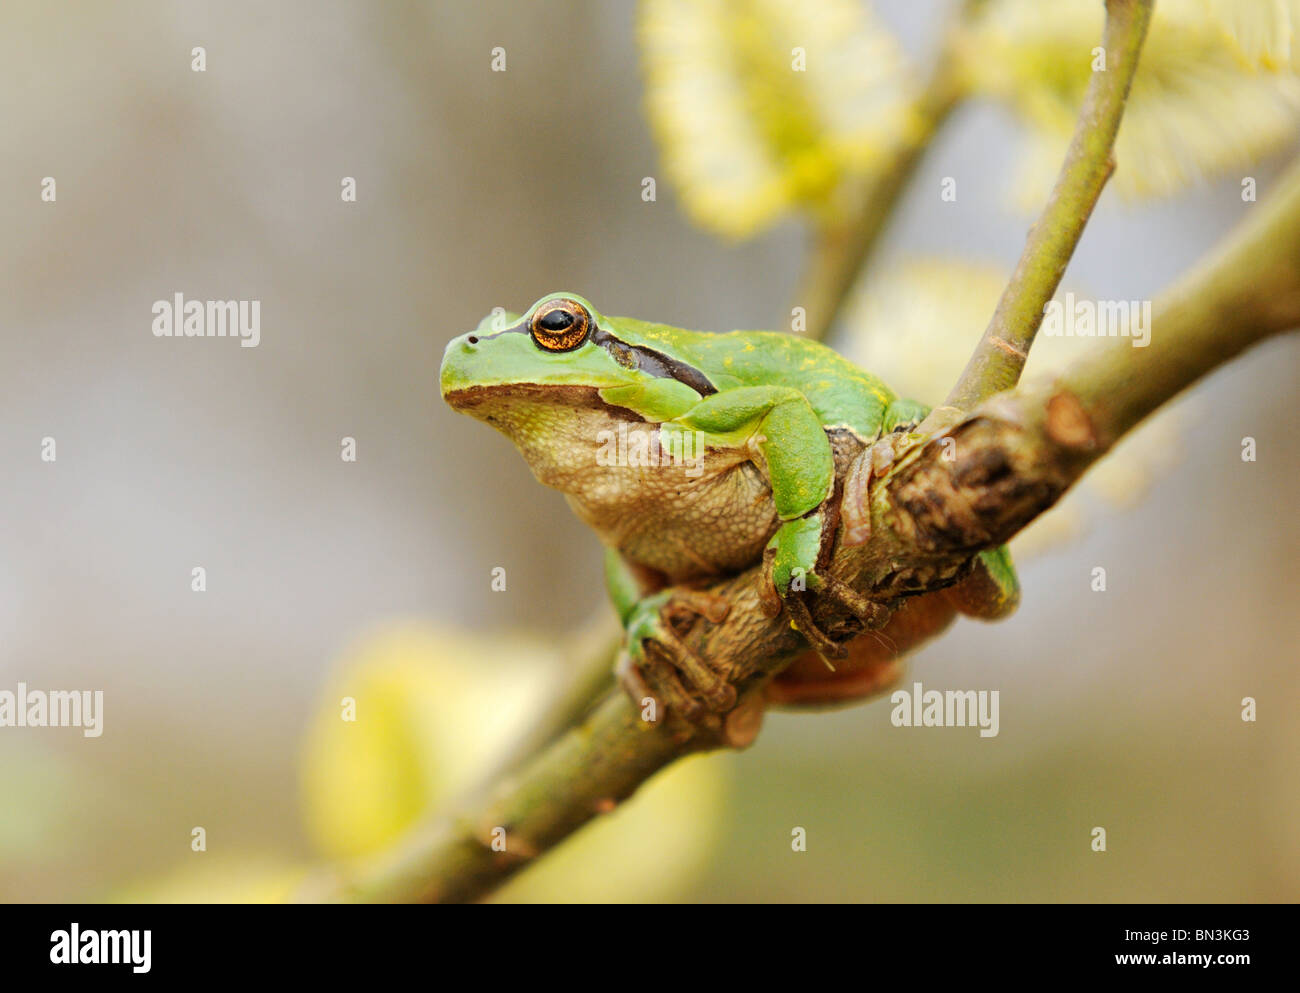 European tree frog (Hyla arborea) sitting on a twig, low angle view Stock Photo